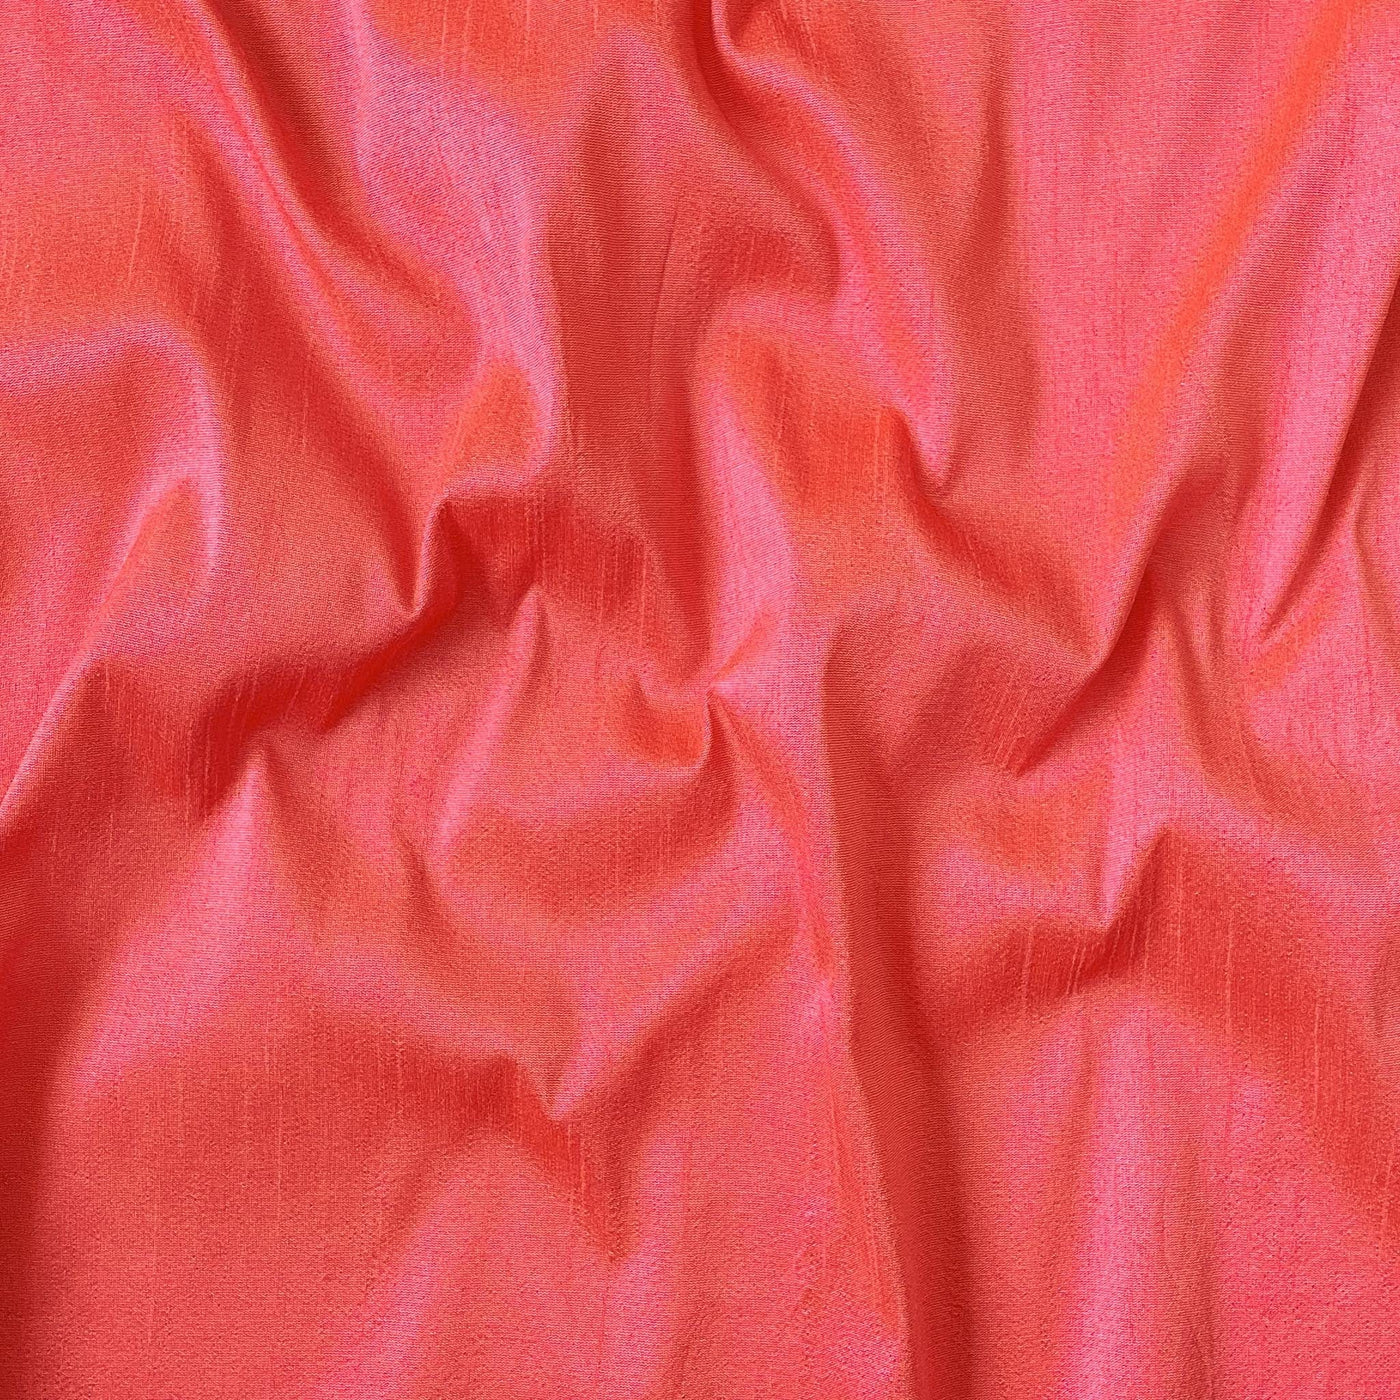 Fabric Pandit Fabric Shiny Orange Color Plain Premium Dupion Silk Fabric (Width 44 Inches)